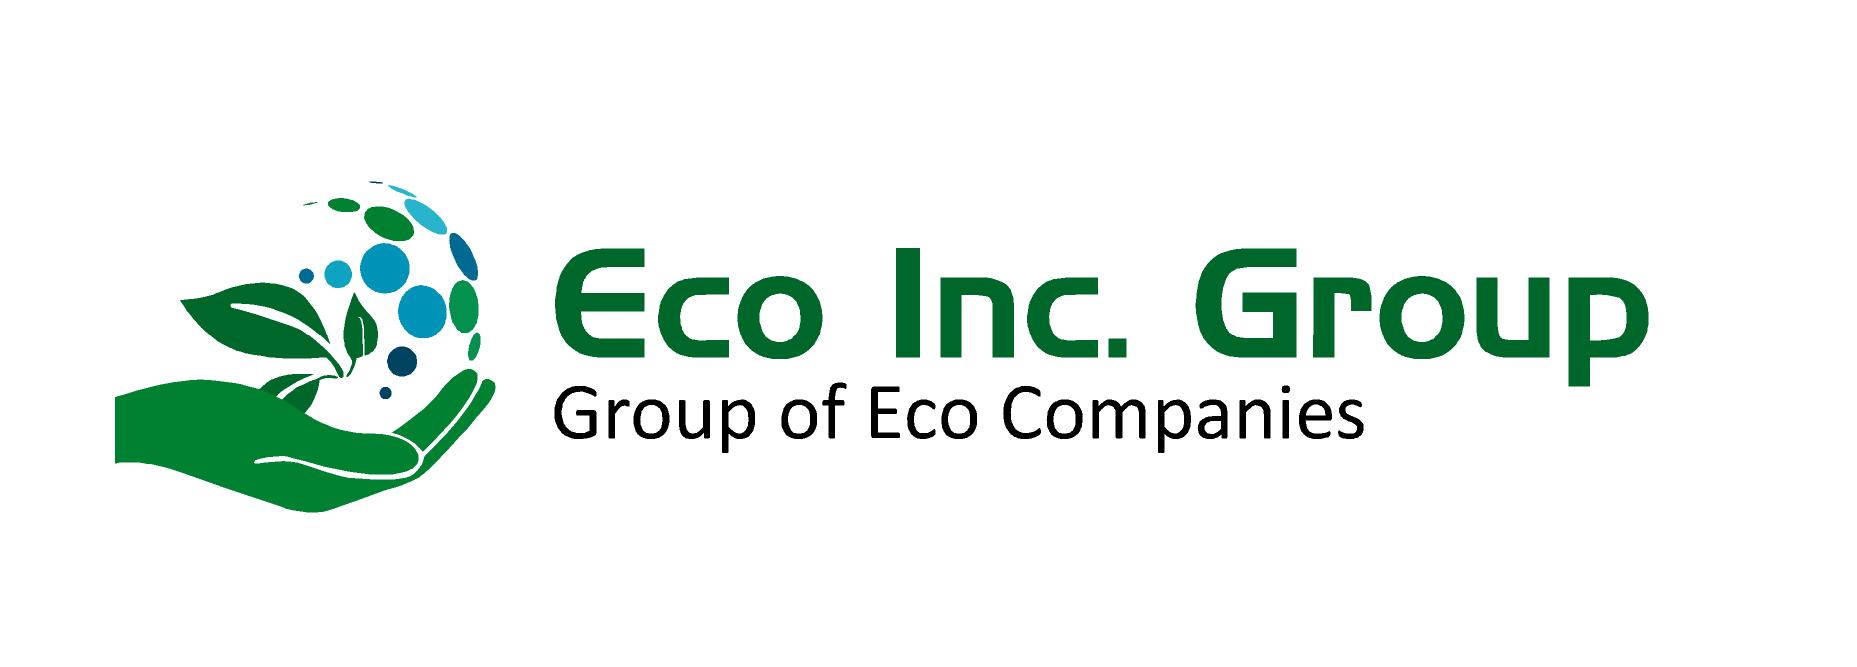 Eco Incorporation Group Logo